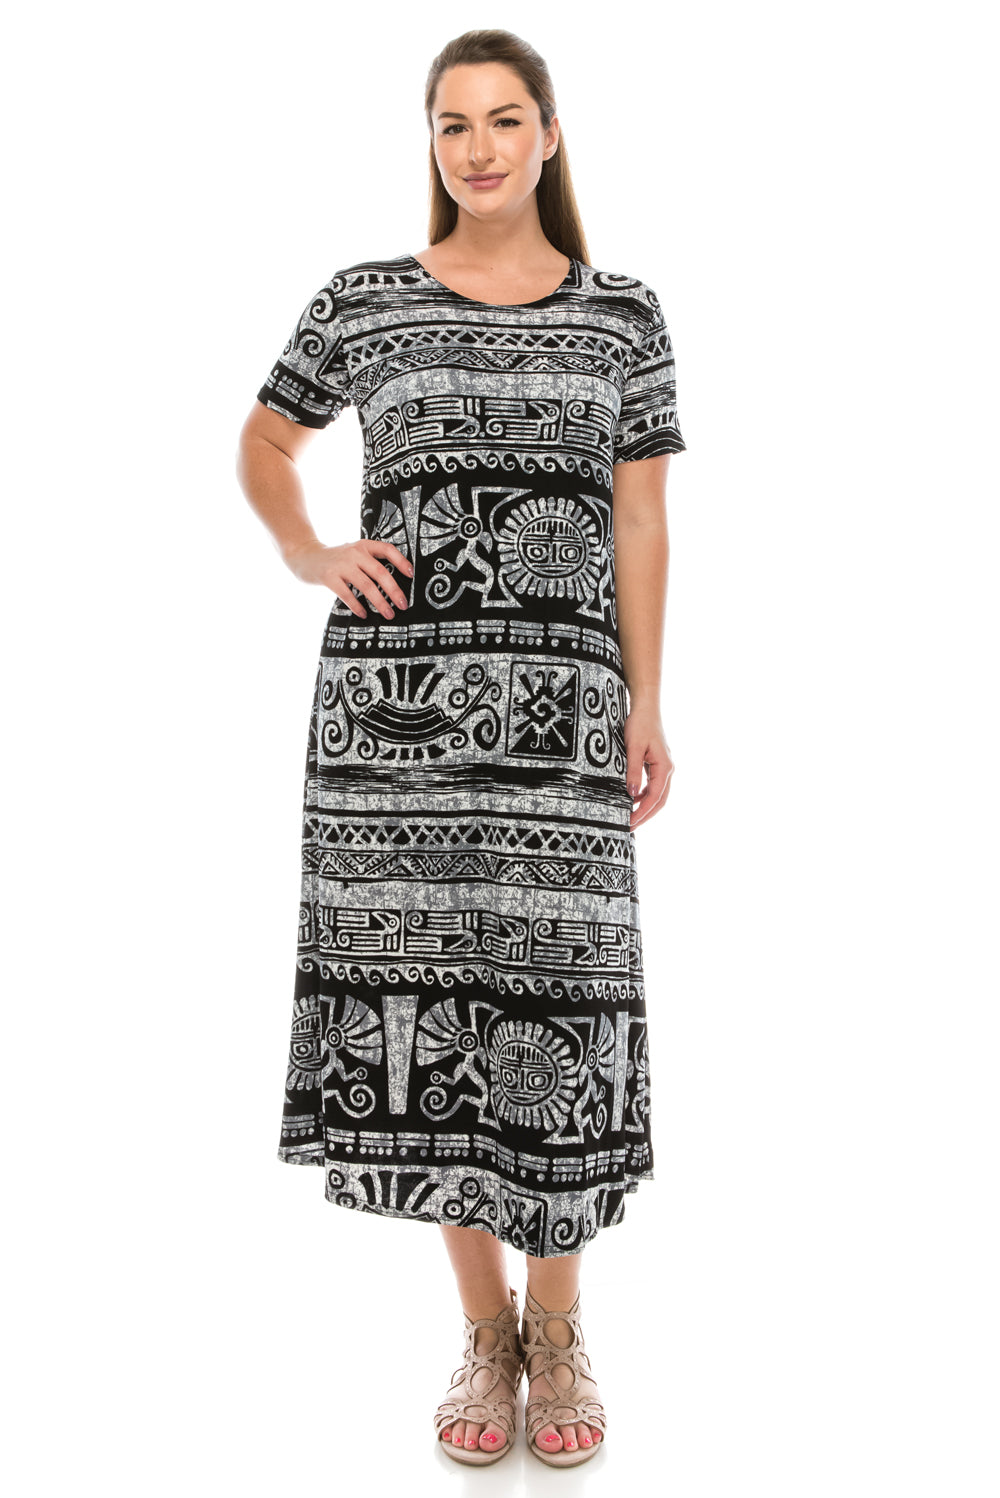 Jostar Women's Stretchy Long Dress Short Sleeve Print, 702BN-SP-W901 - Jostar Online